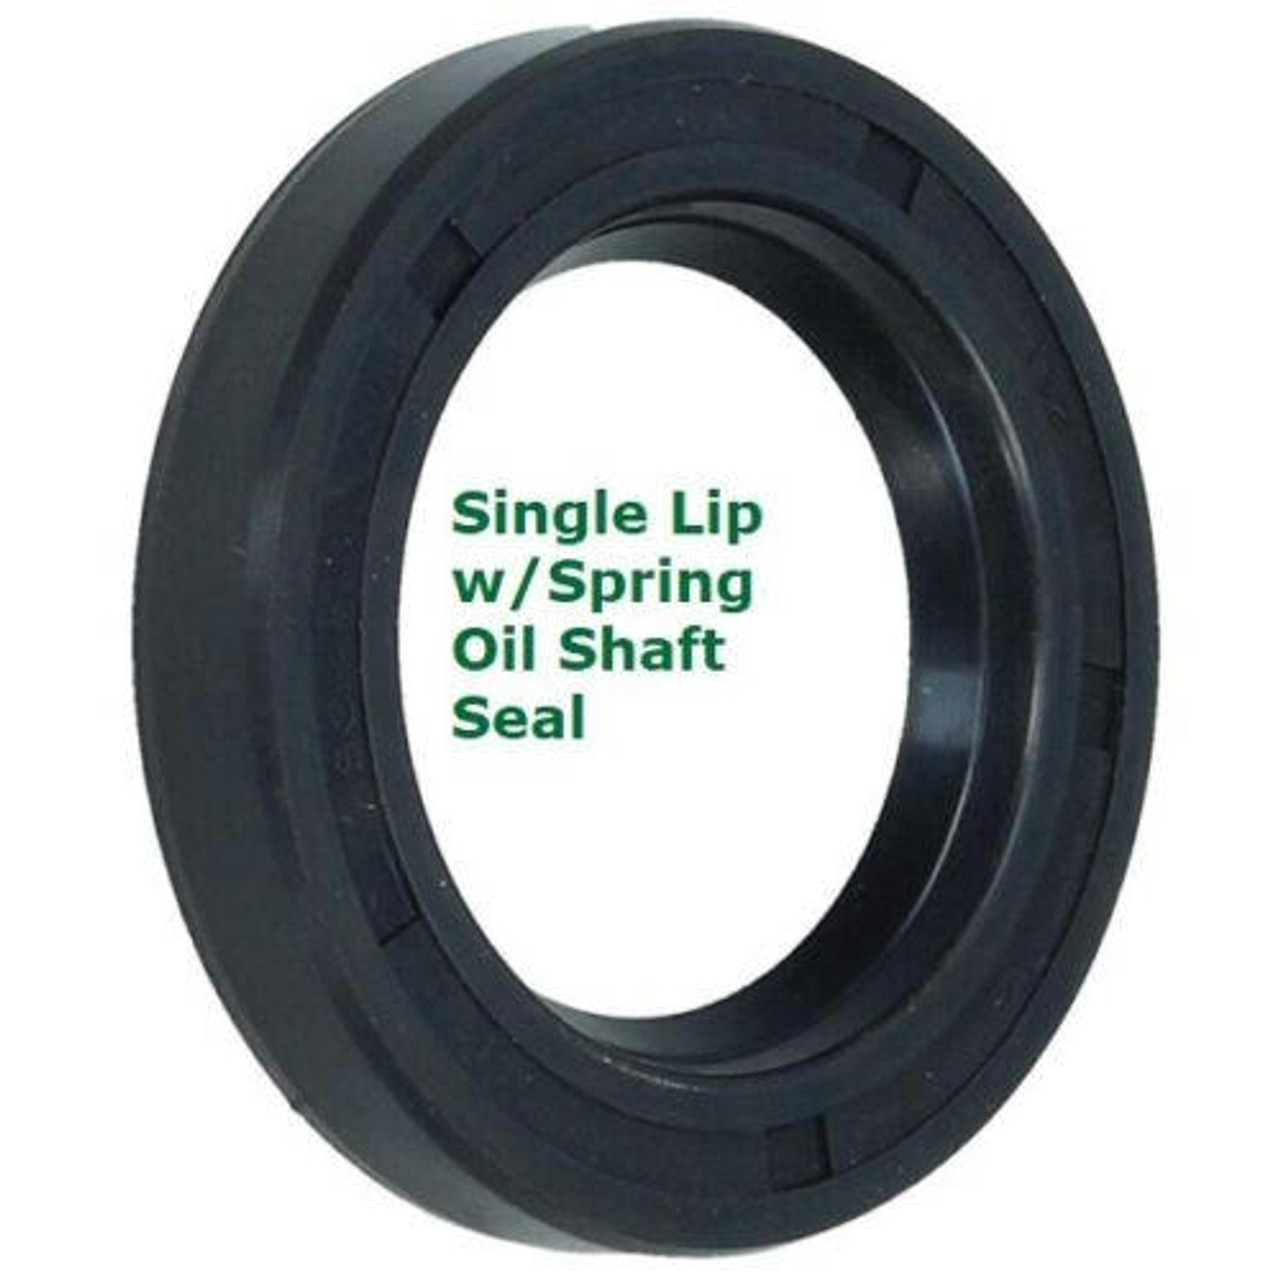 Metric Oil Shaft Seal 55 x 72 x 8mm Single Lip  Ref# CR564149 or  CR564729